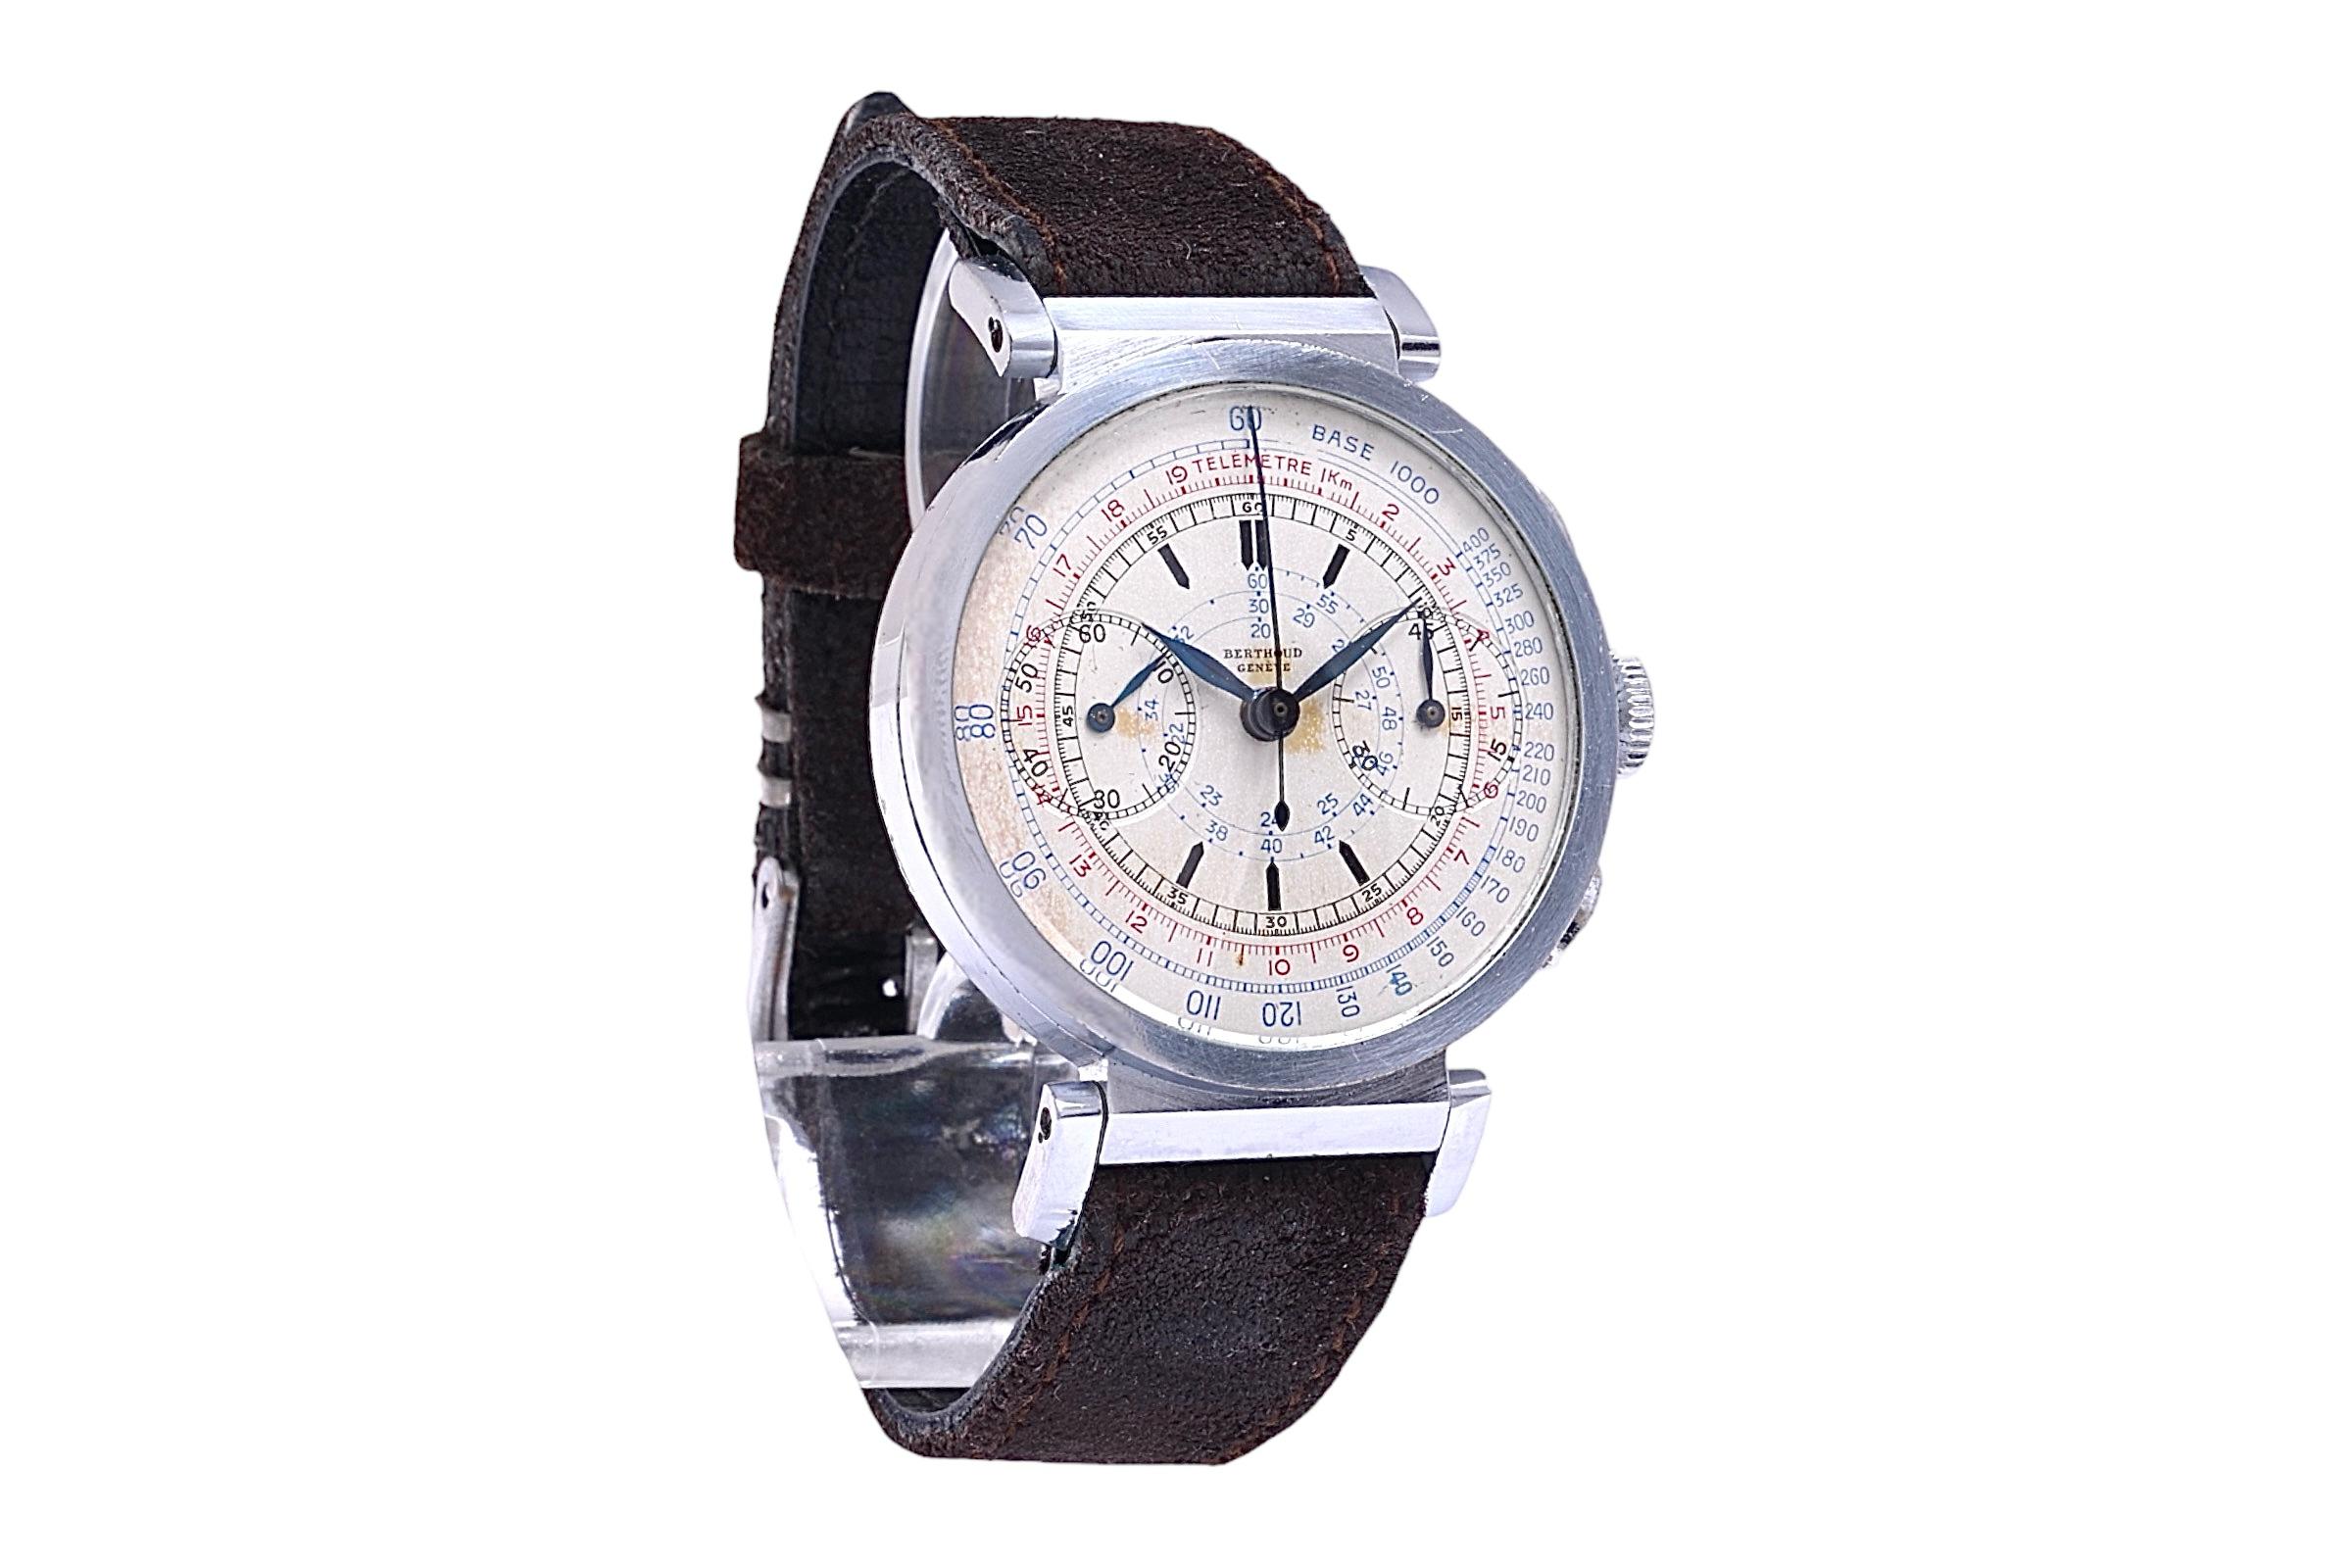 Artisan Berthoud / Universal Genève Uni Compax Chronograph Wrist Watch, Rare Collectors For Sale